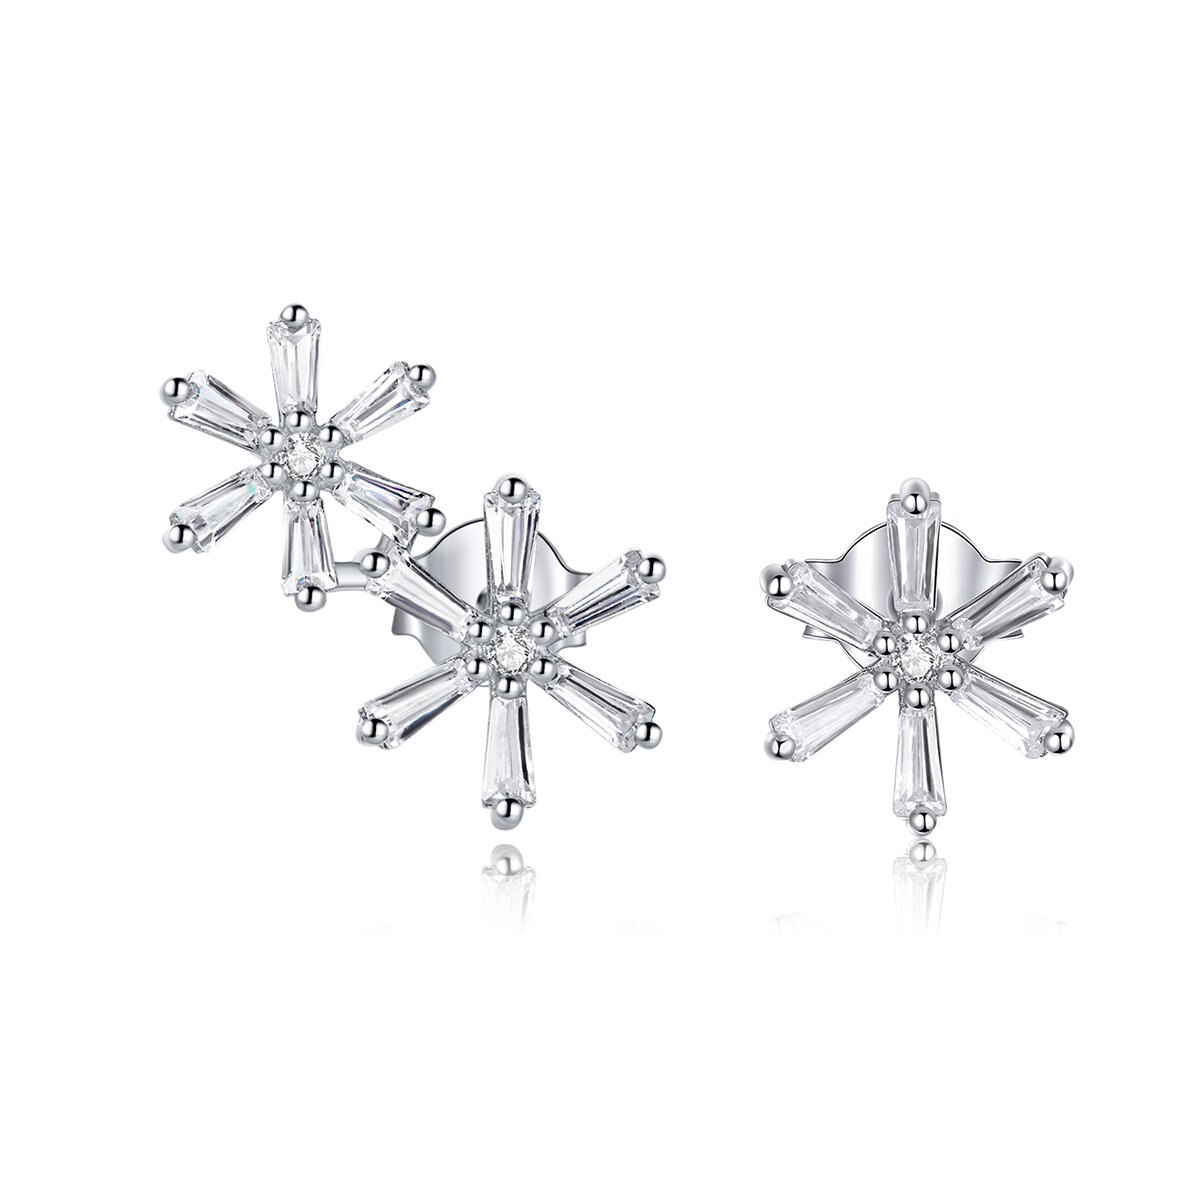 GemKing BSE425 crystal snowflakes S925 Sterling Silver Earring